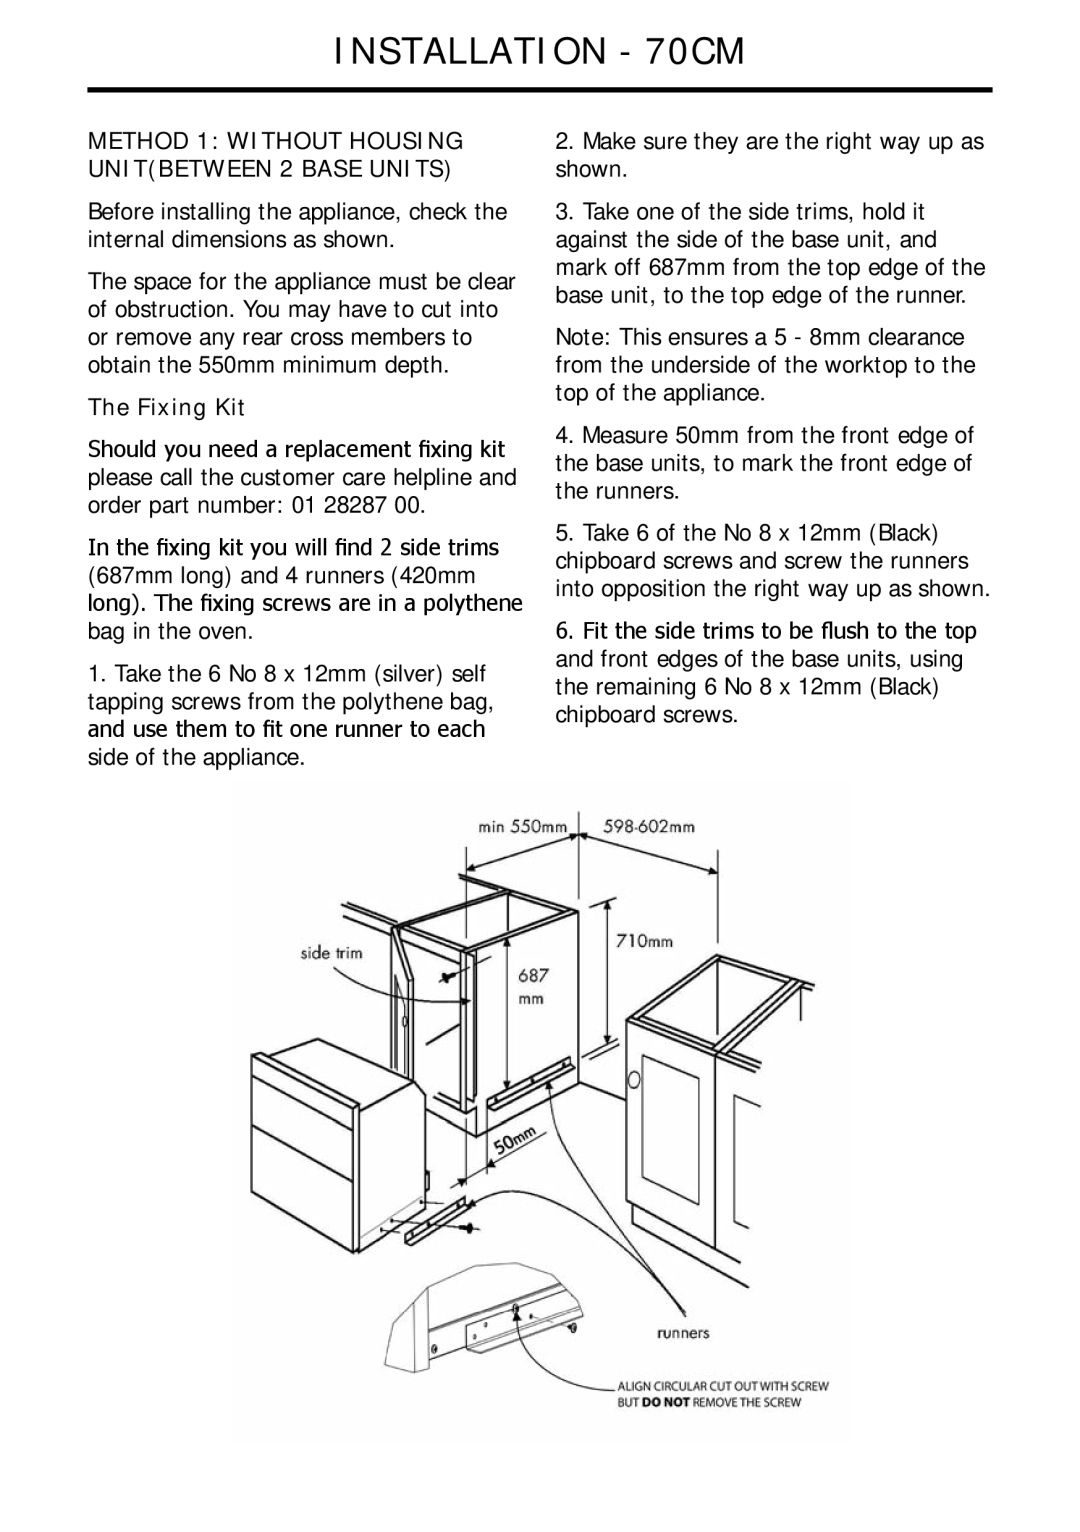 Glen Dimplex Home Appliances Ltd 82757900 manual INSTALLATION - 70CM, The Fixing Kit 